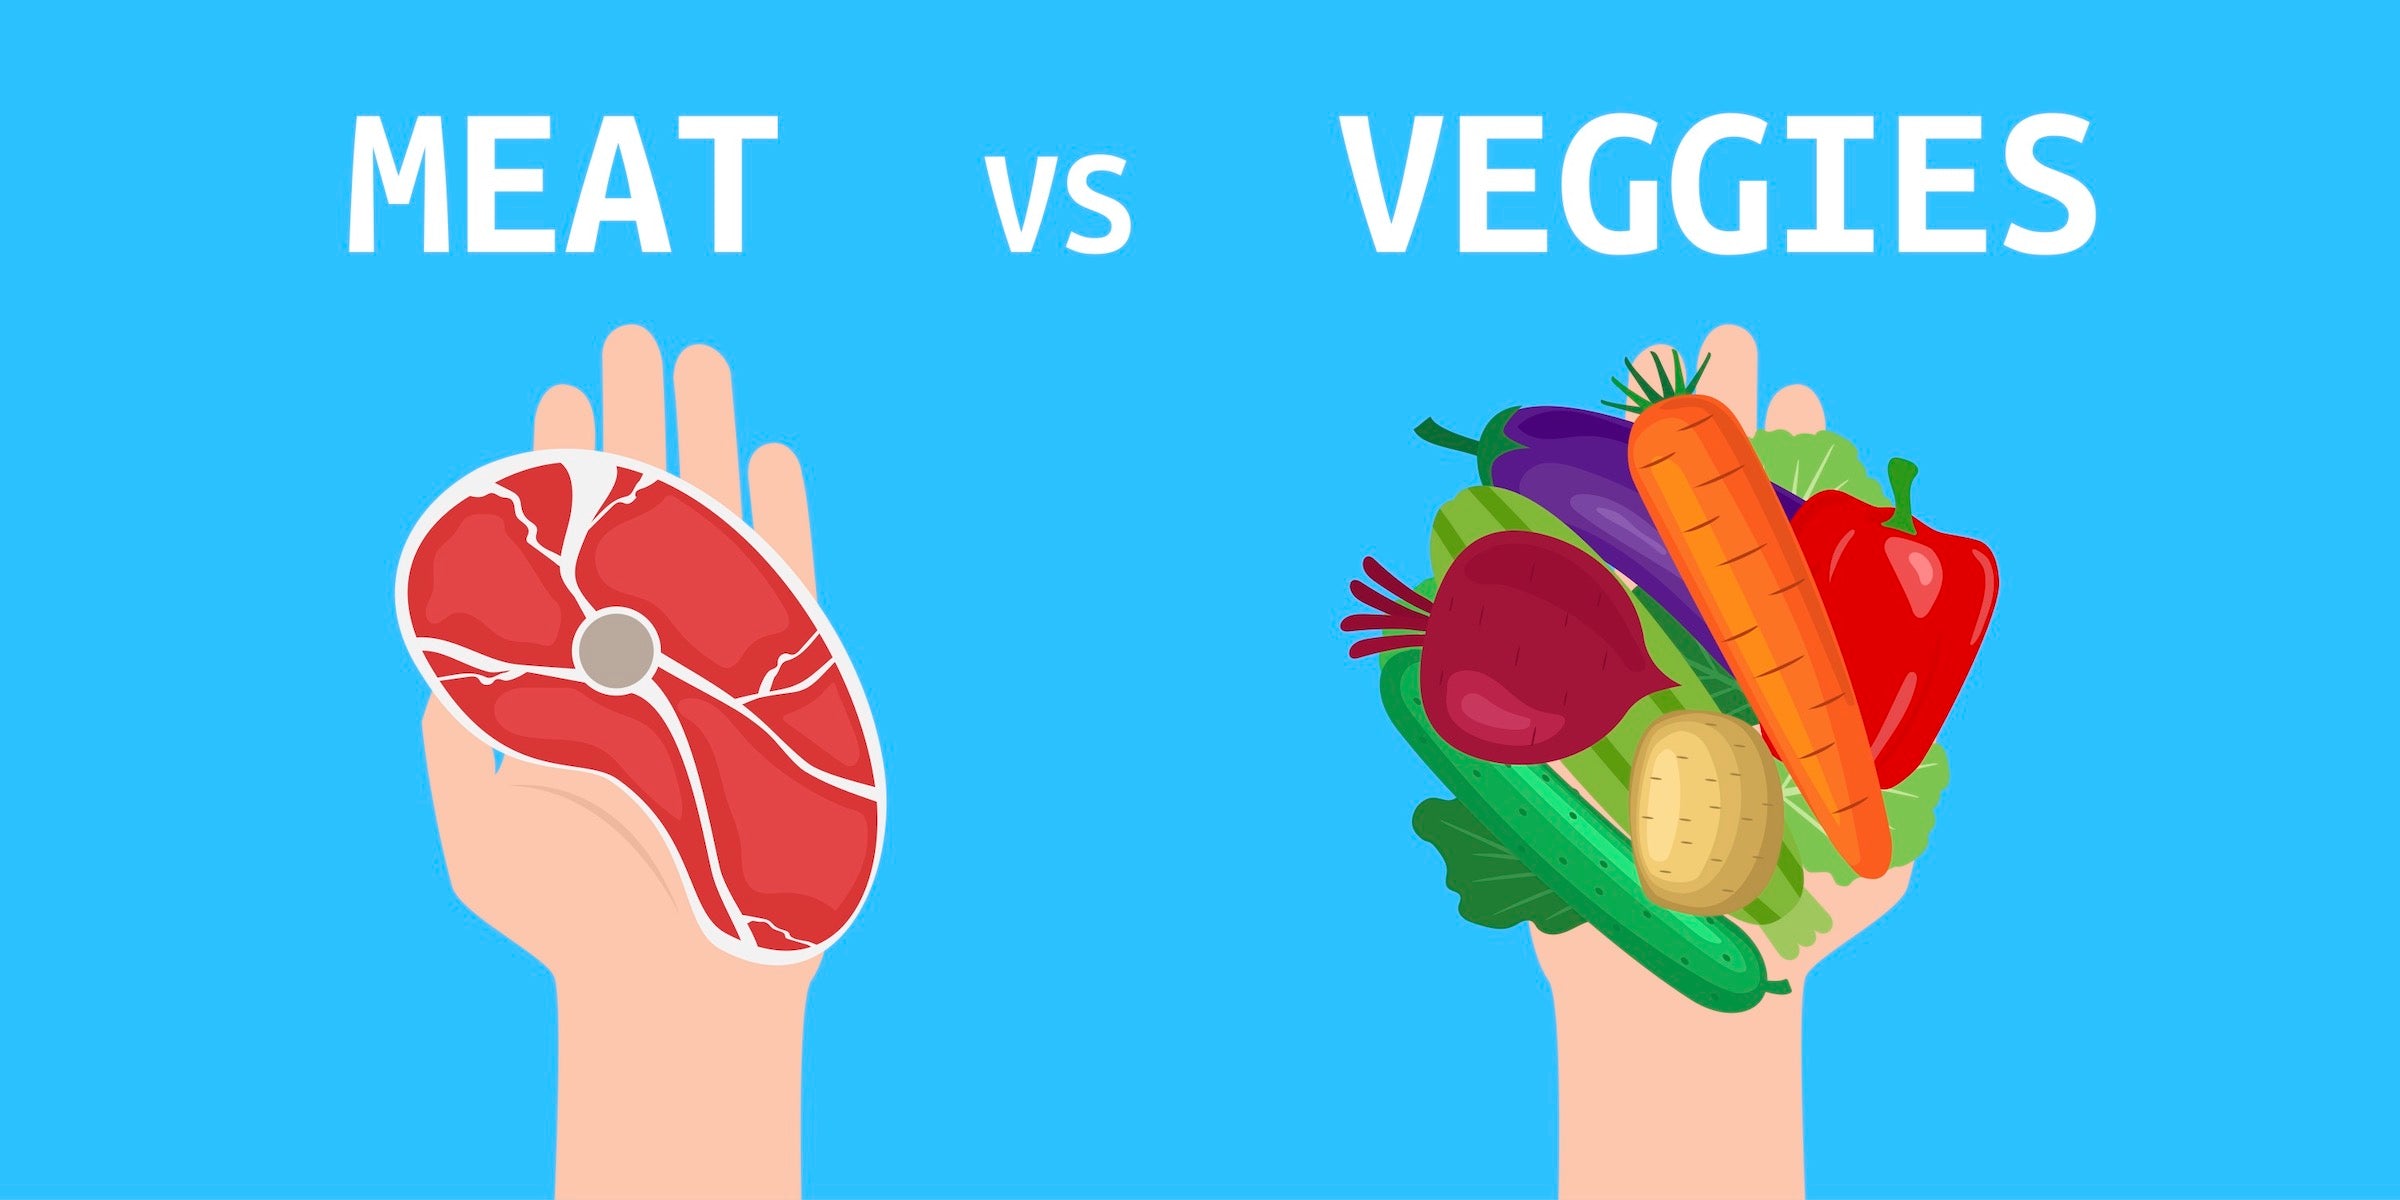 Meat vs. veggies comparison article